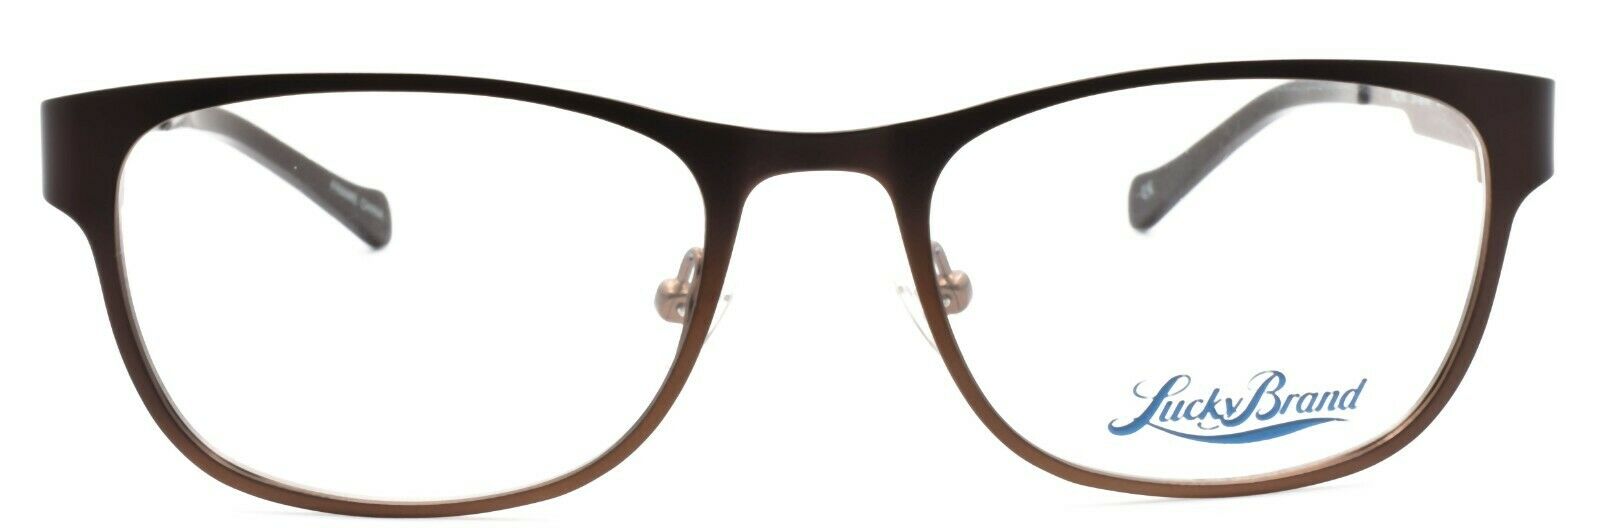 2-LUCKY BRAND Pacific Women's Eyeglasses Frames 51-18-140 Brown Gradient + CASE-751286256512-IKSpecs